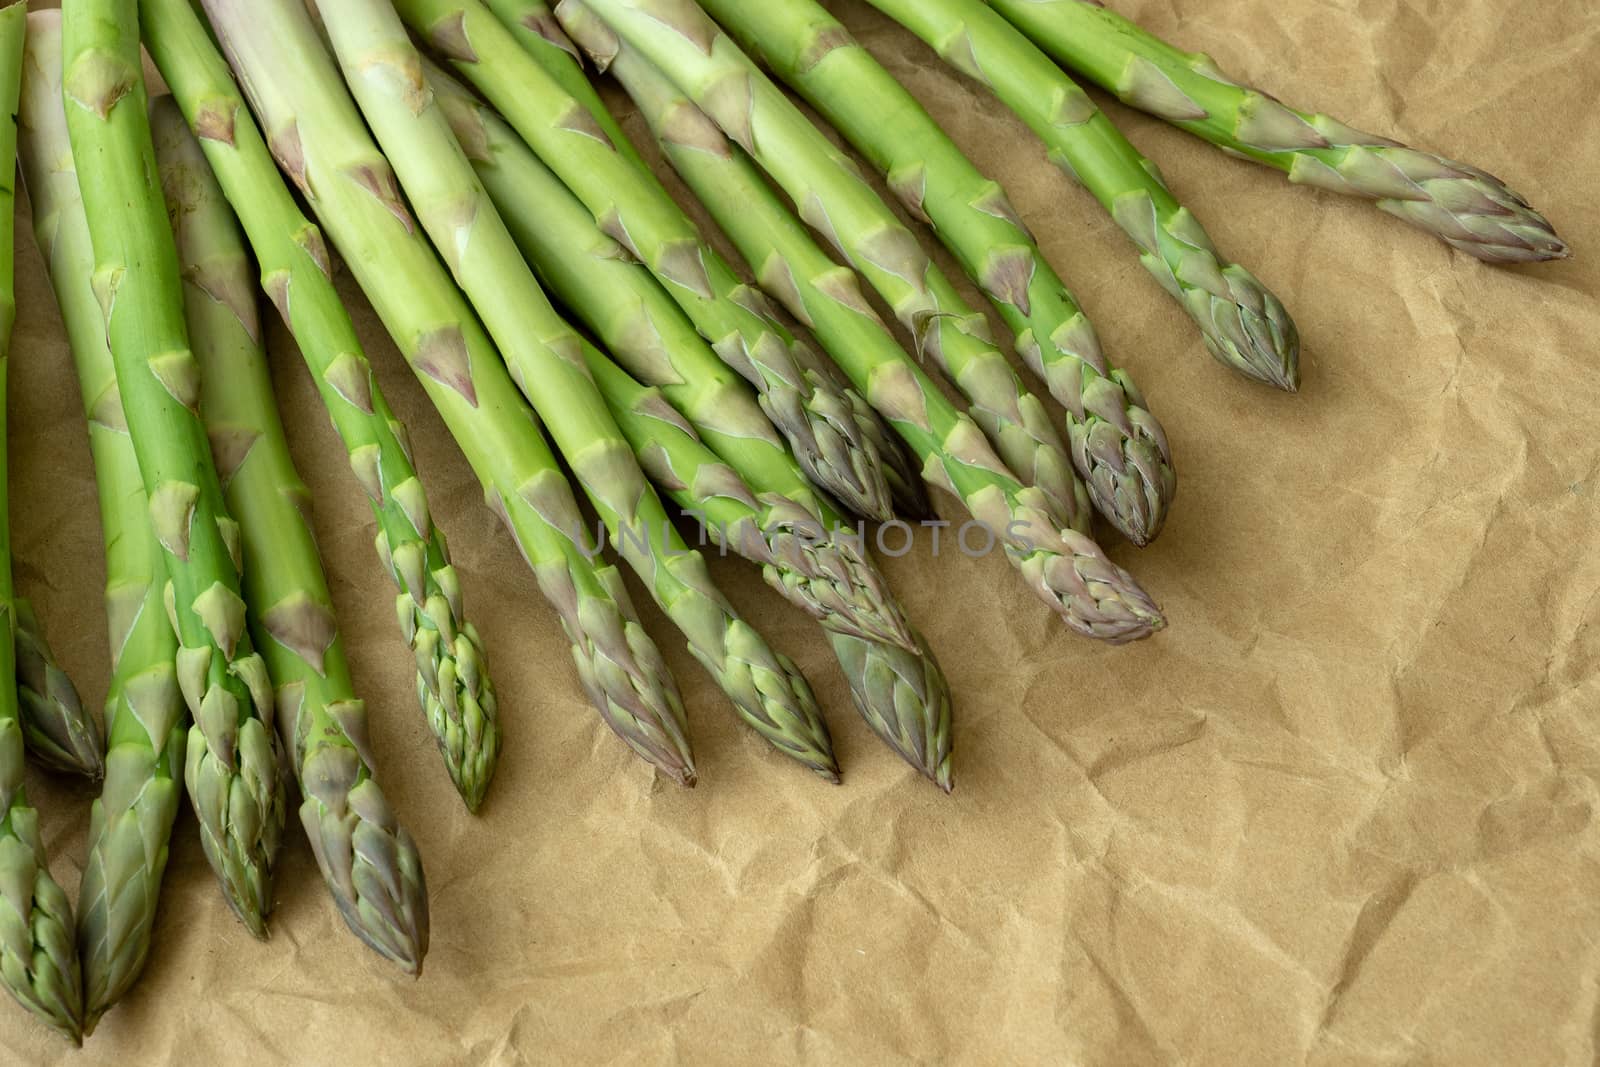 Raw garden asparagus stems. Fresh green spring vegetables on bro by xtrekx